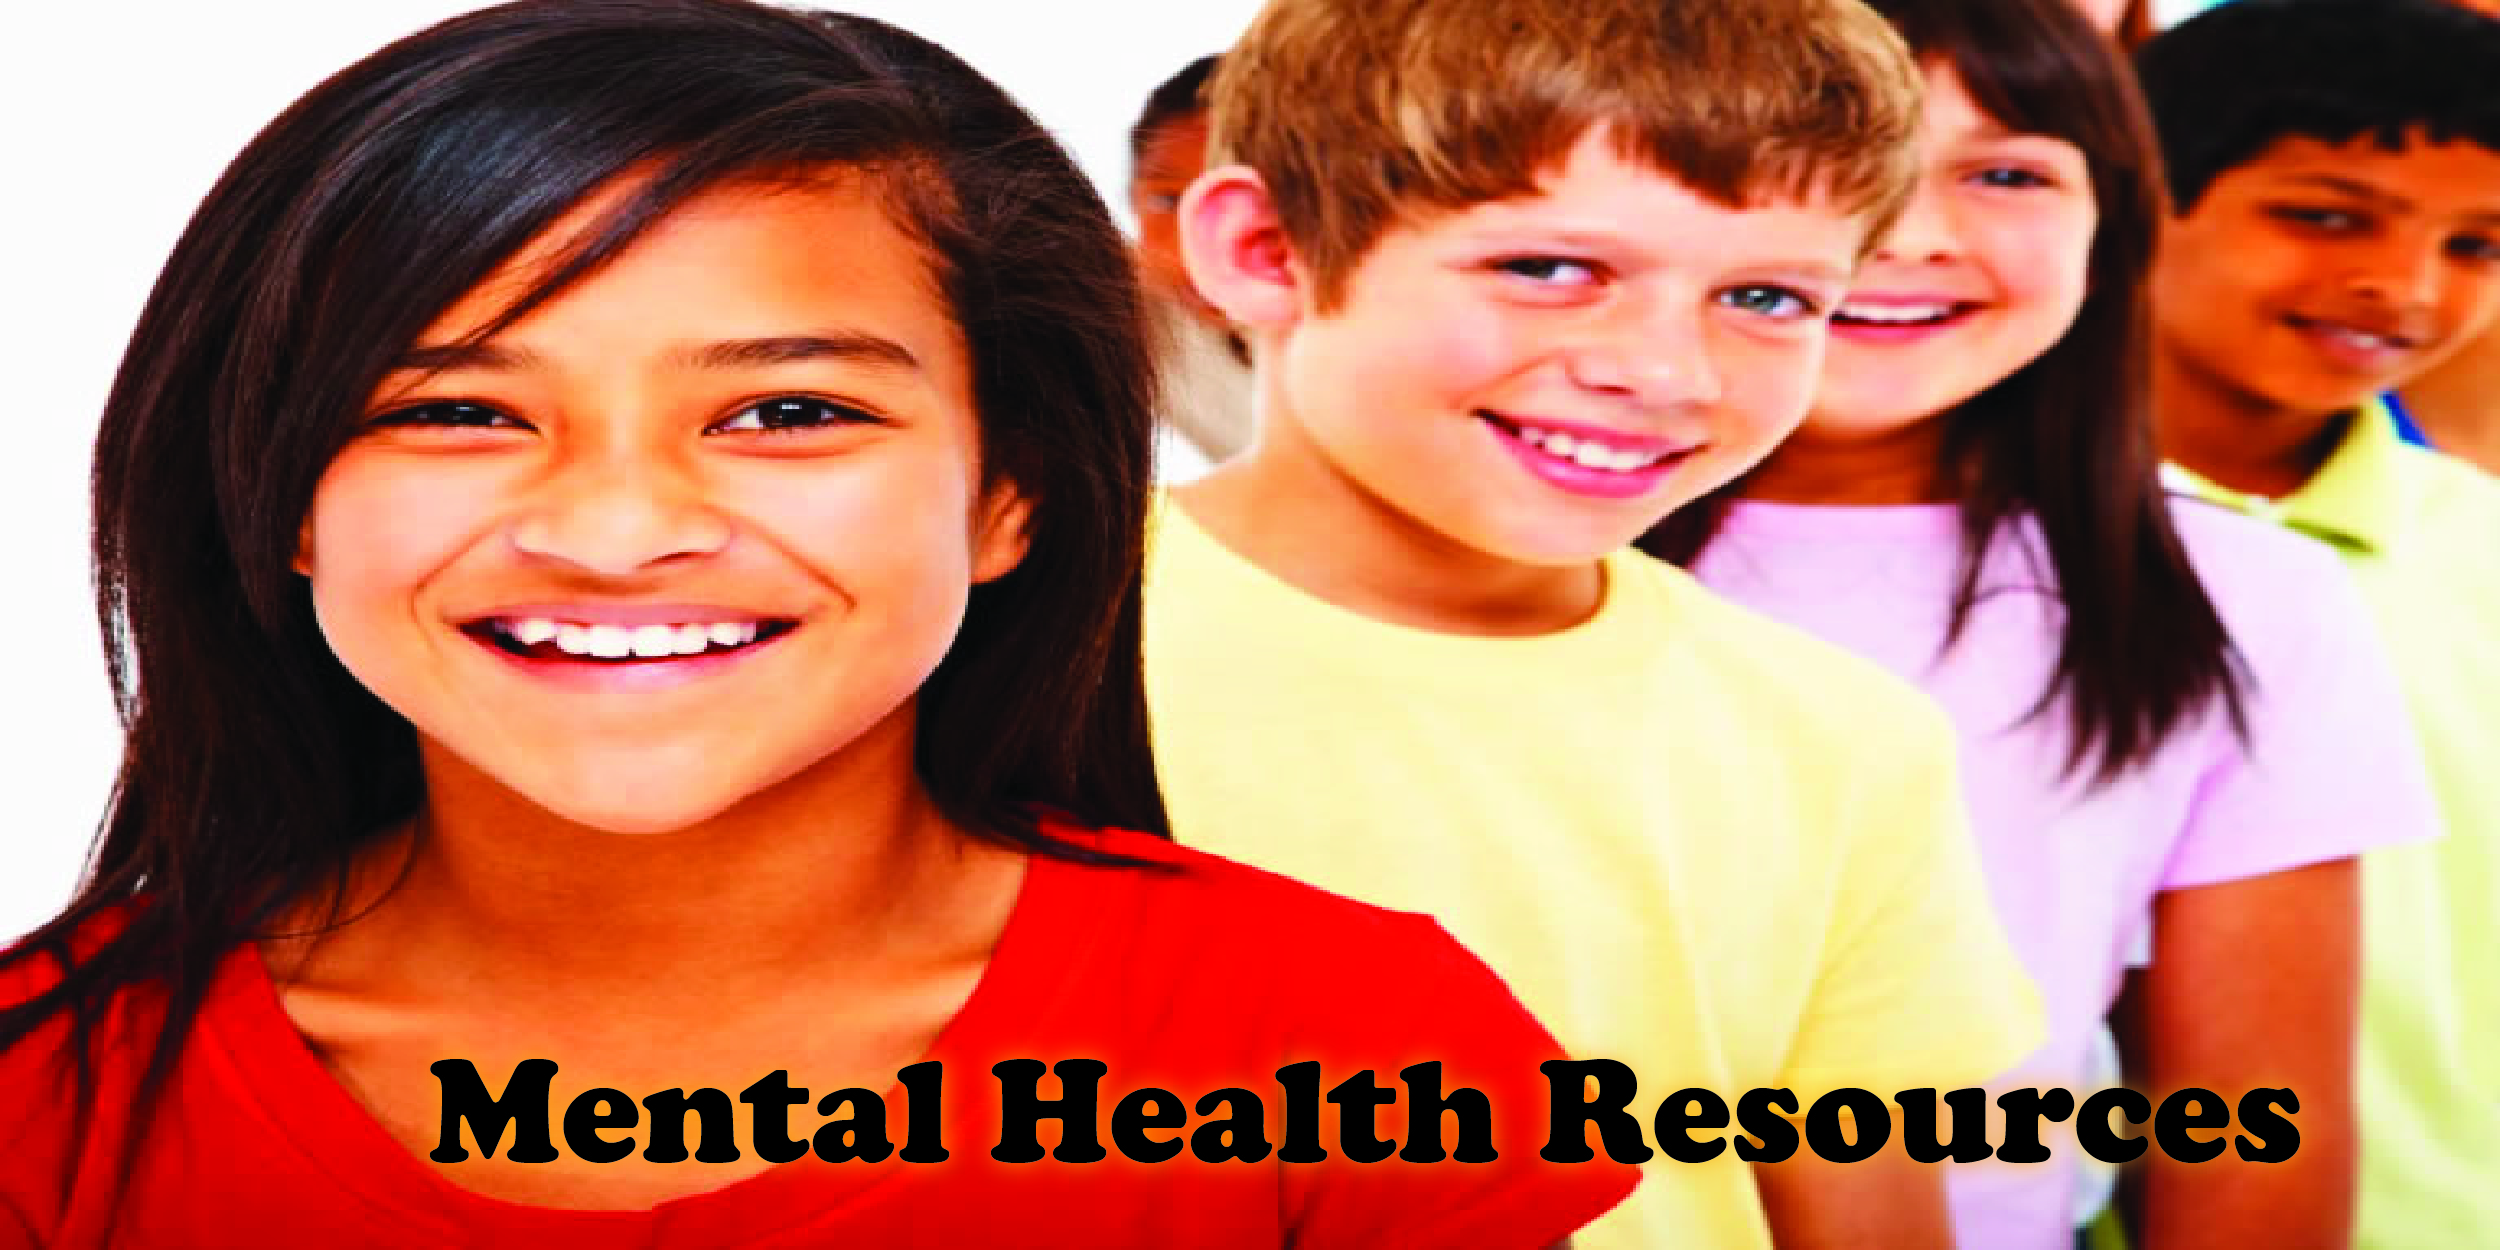 Mental Health Resources